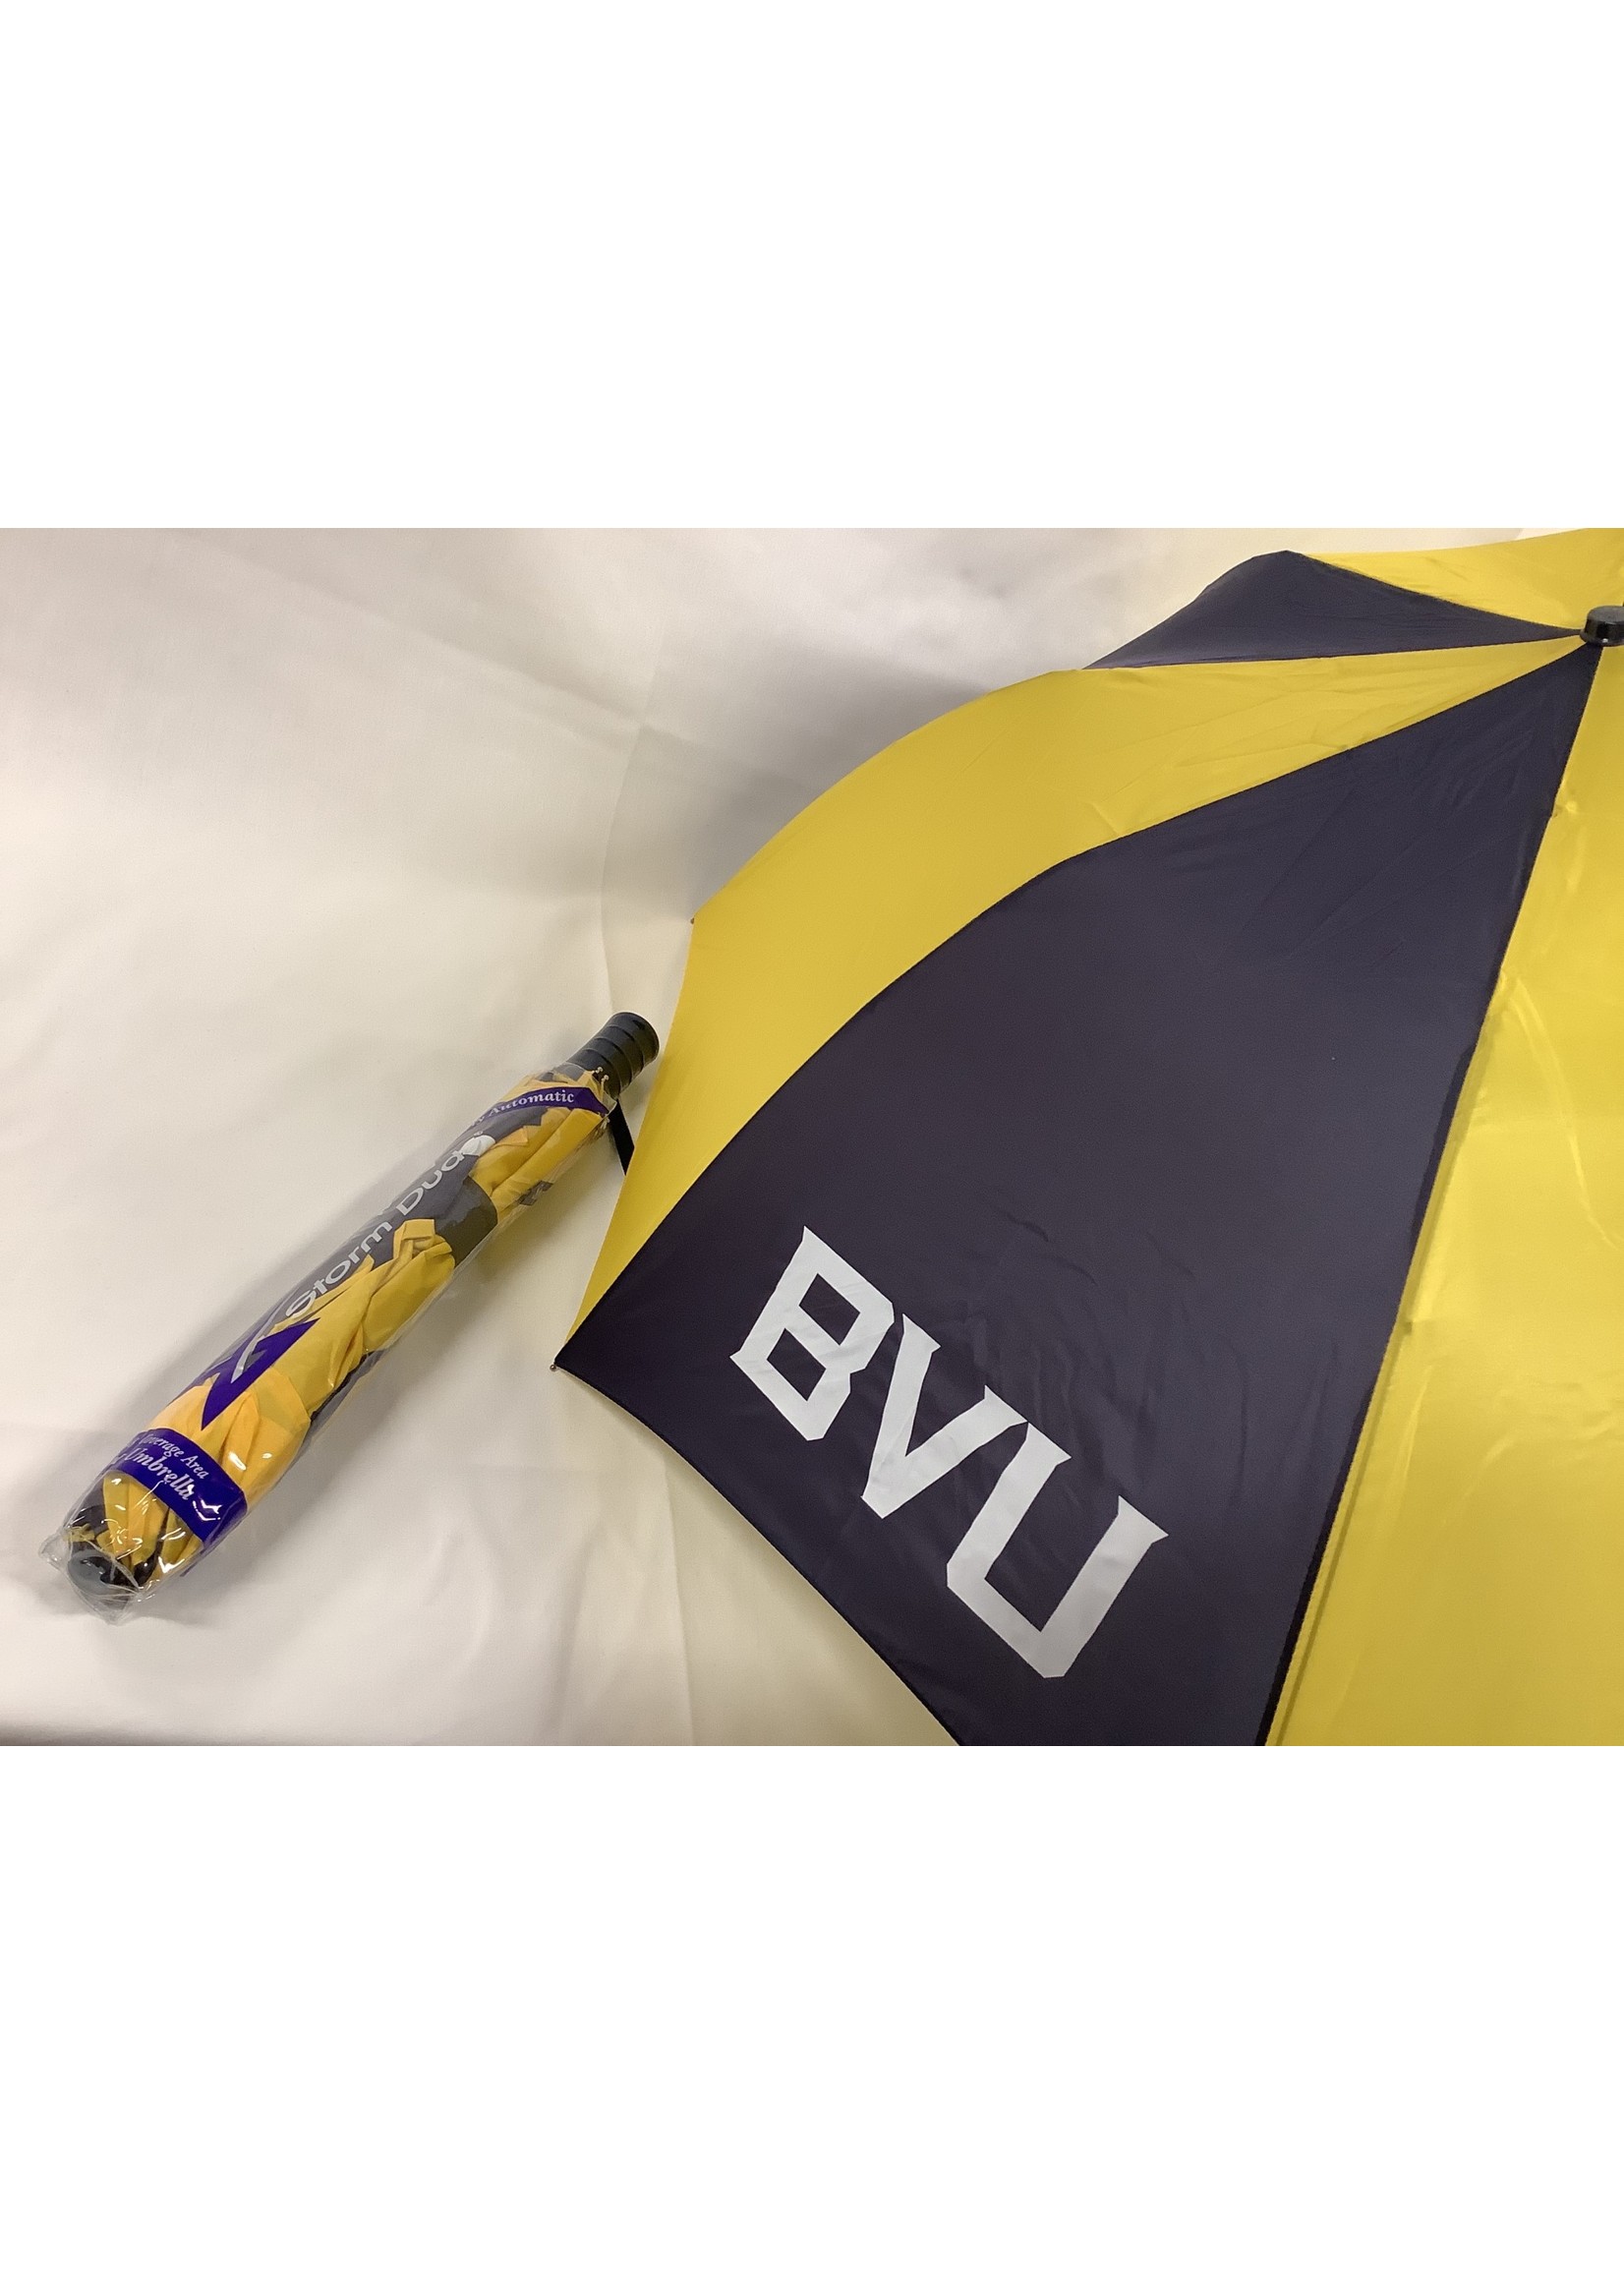 Storm Duds Raingear Navy/Gold BVU Umbrella